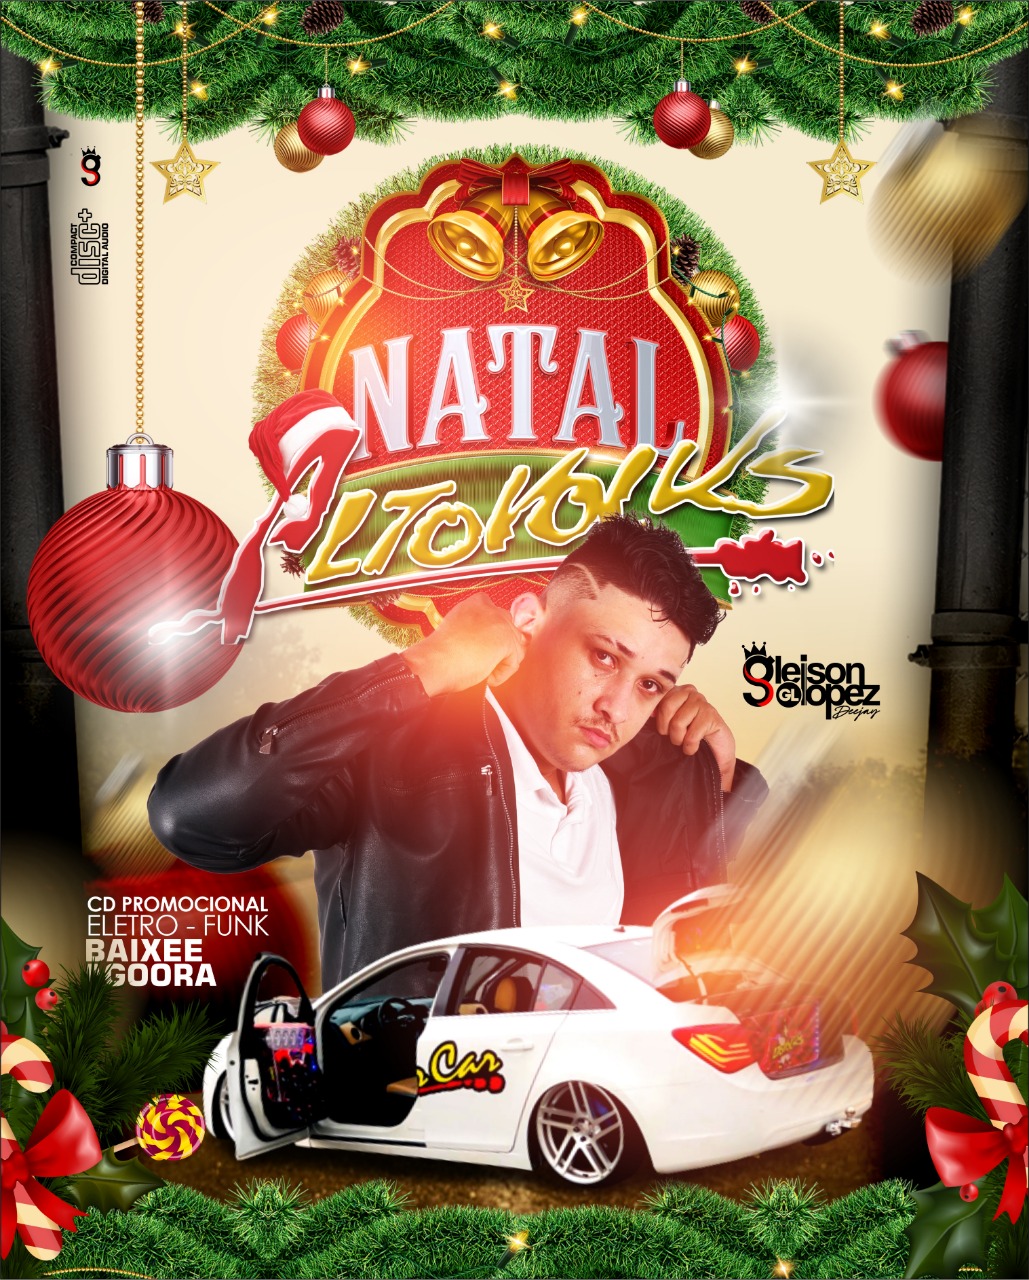 CD DIVULGAÇAO - Natal Altovolks 10 Dezembro - Gleison Lopez